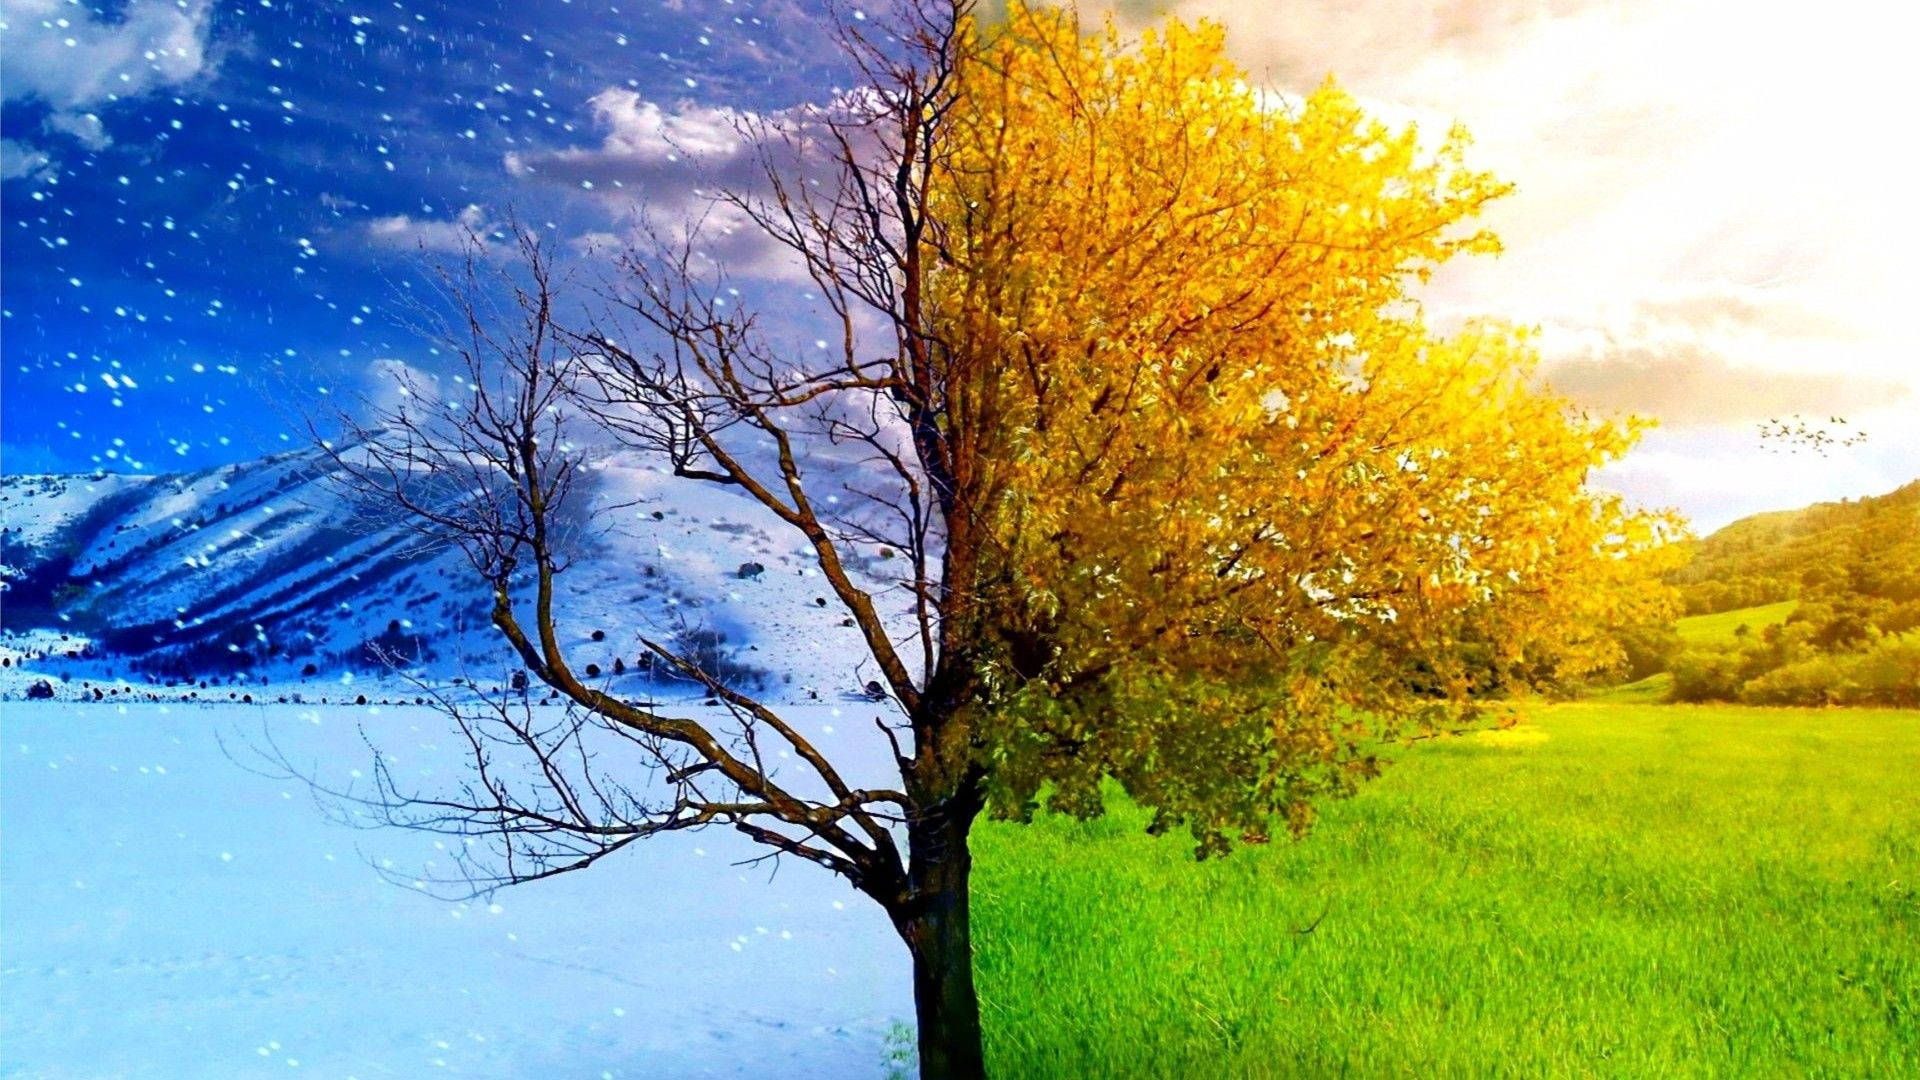 Tree In Two Seasons